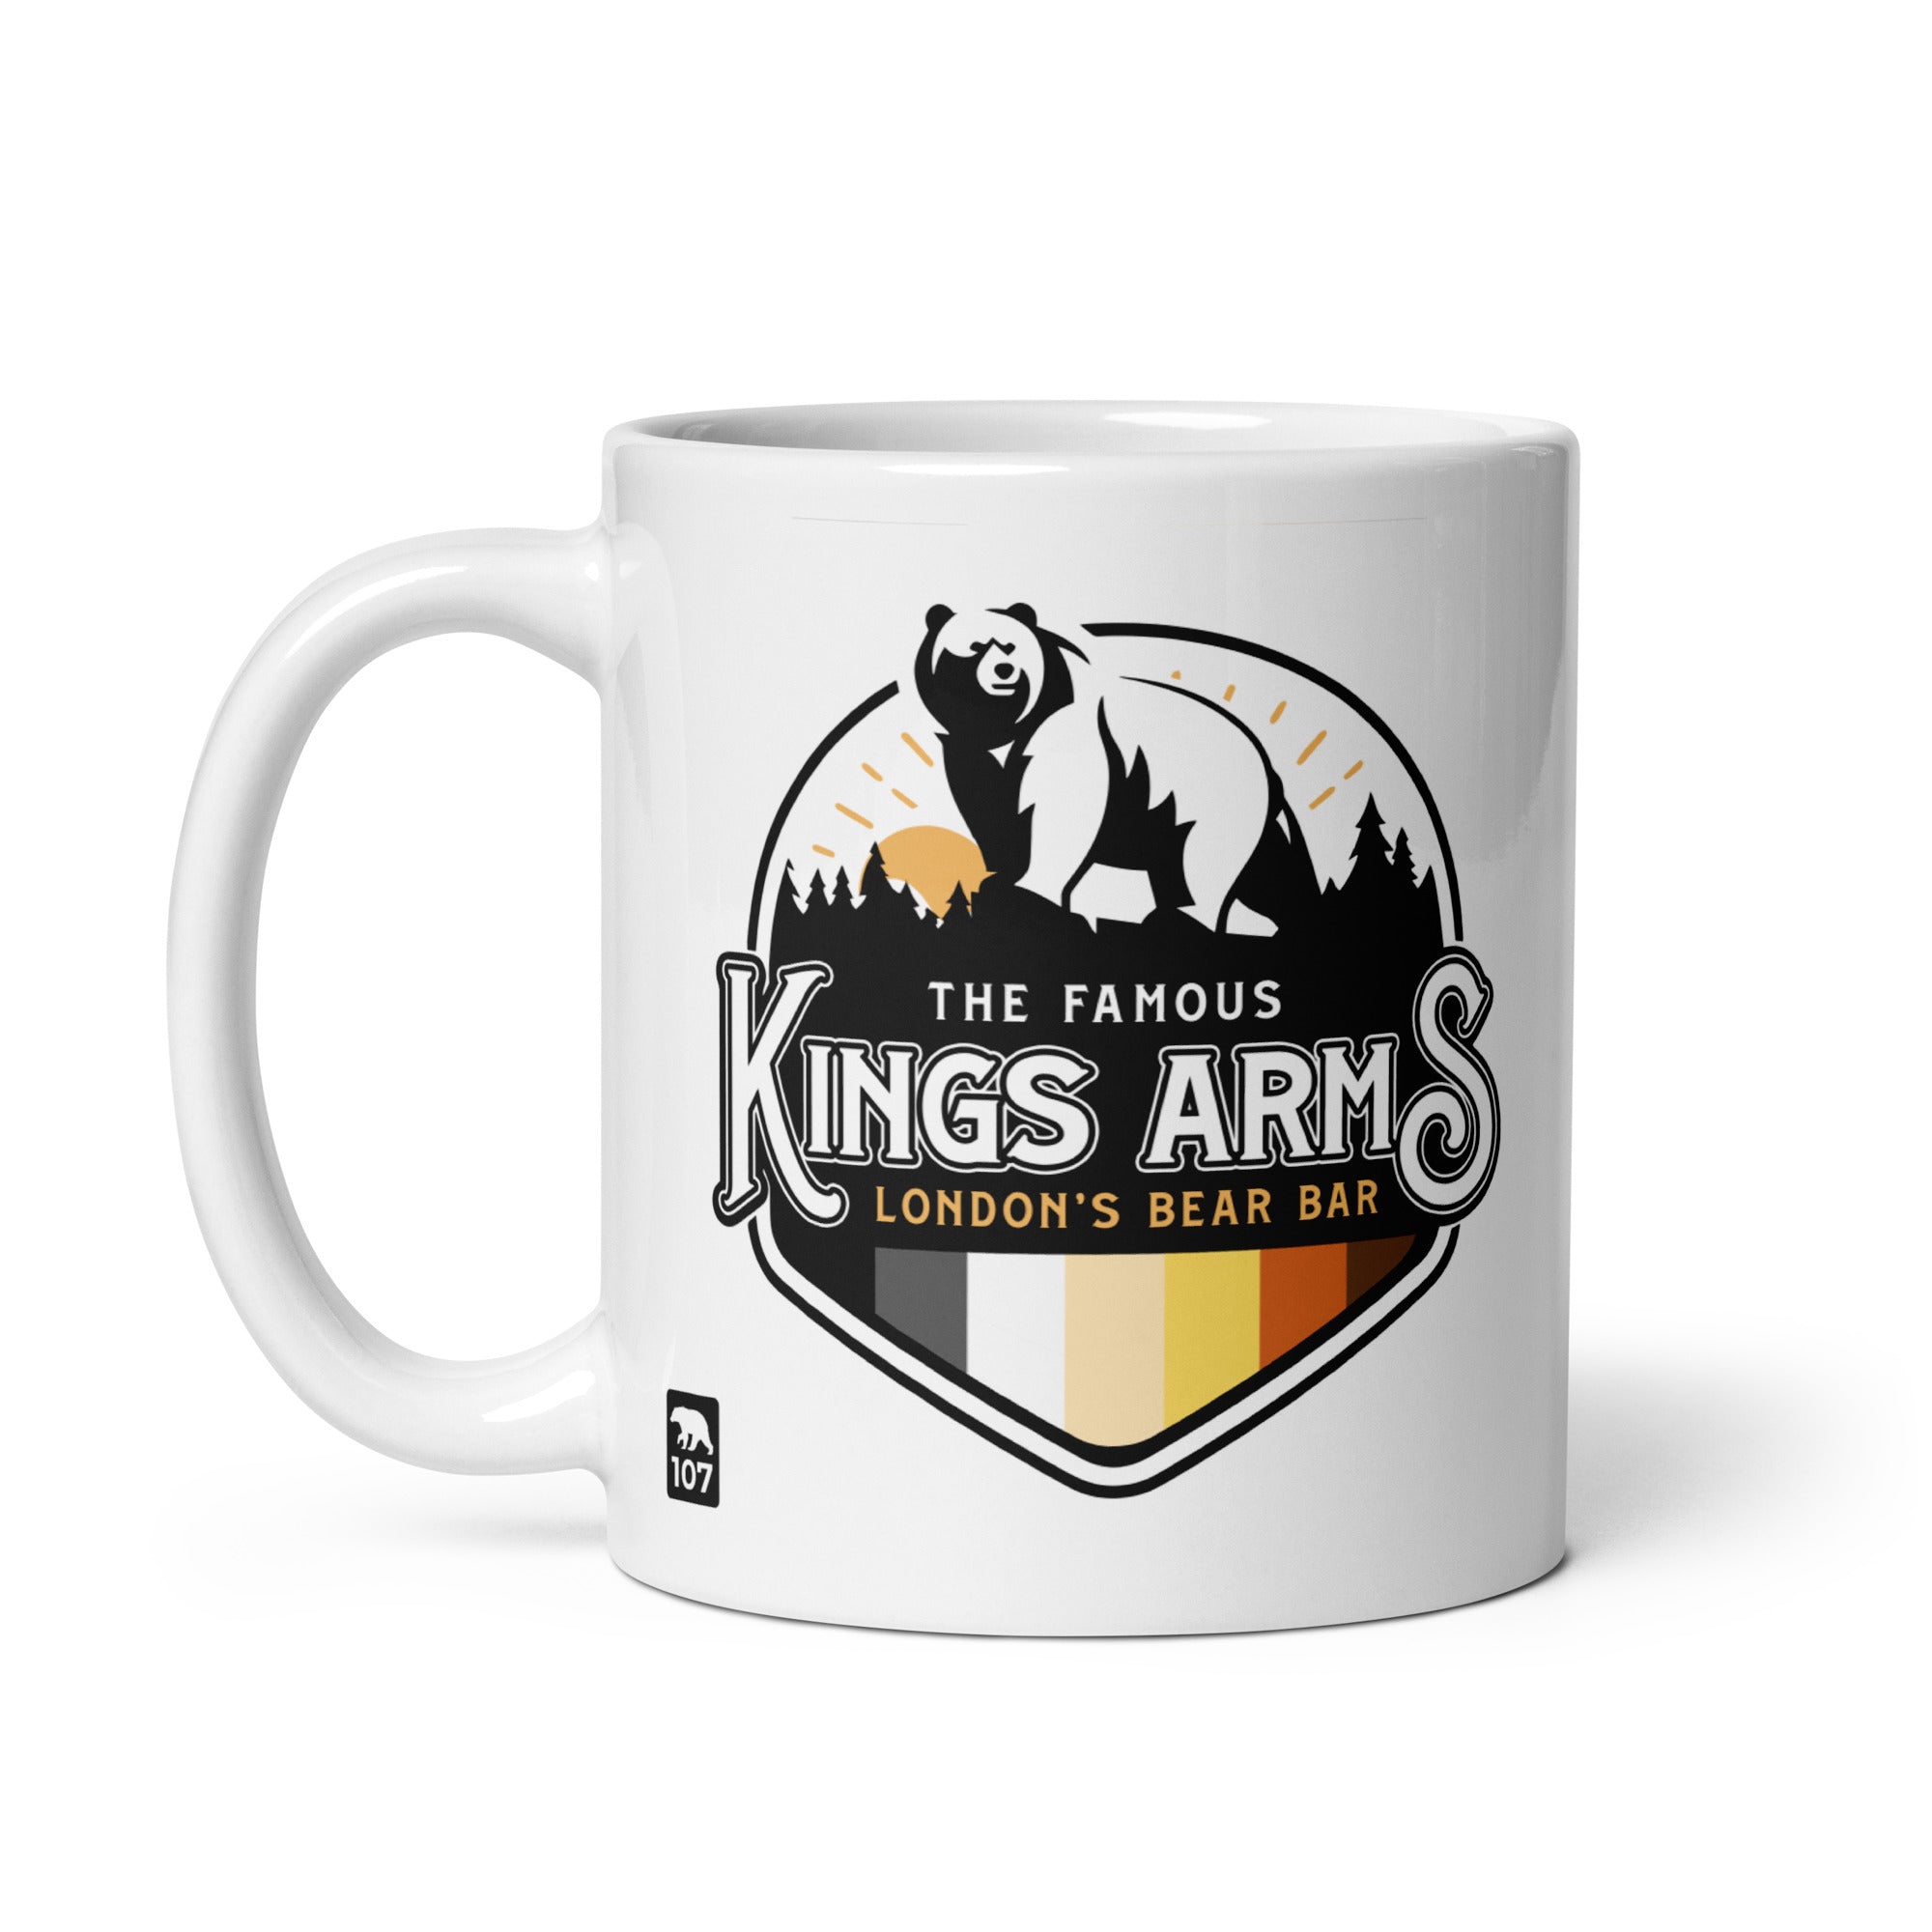 Official Kings Arms White glossy mug